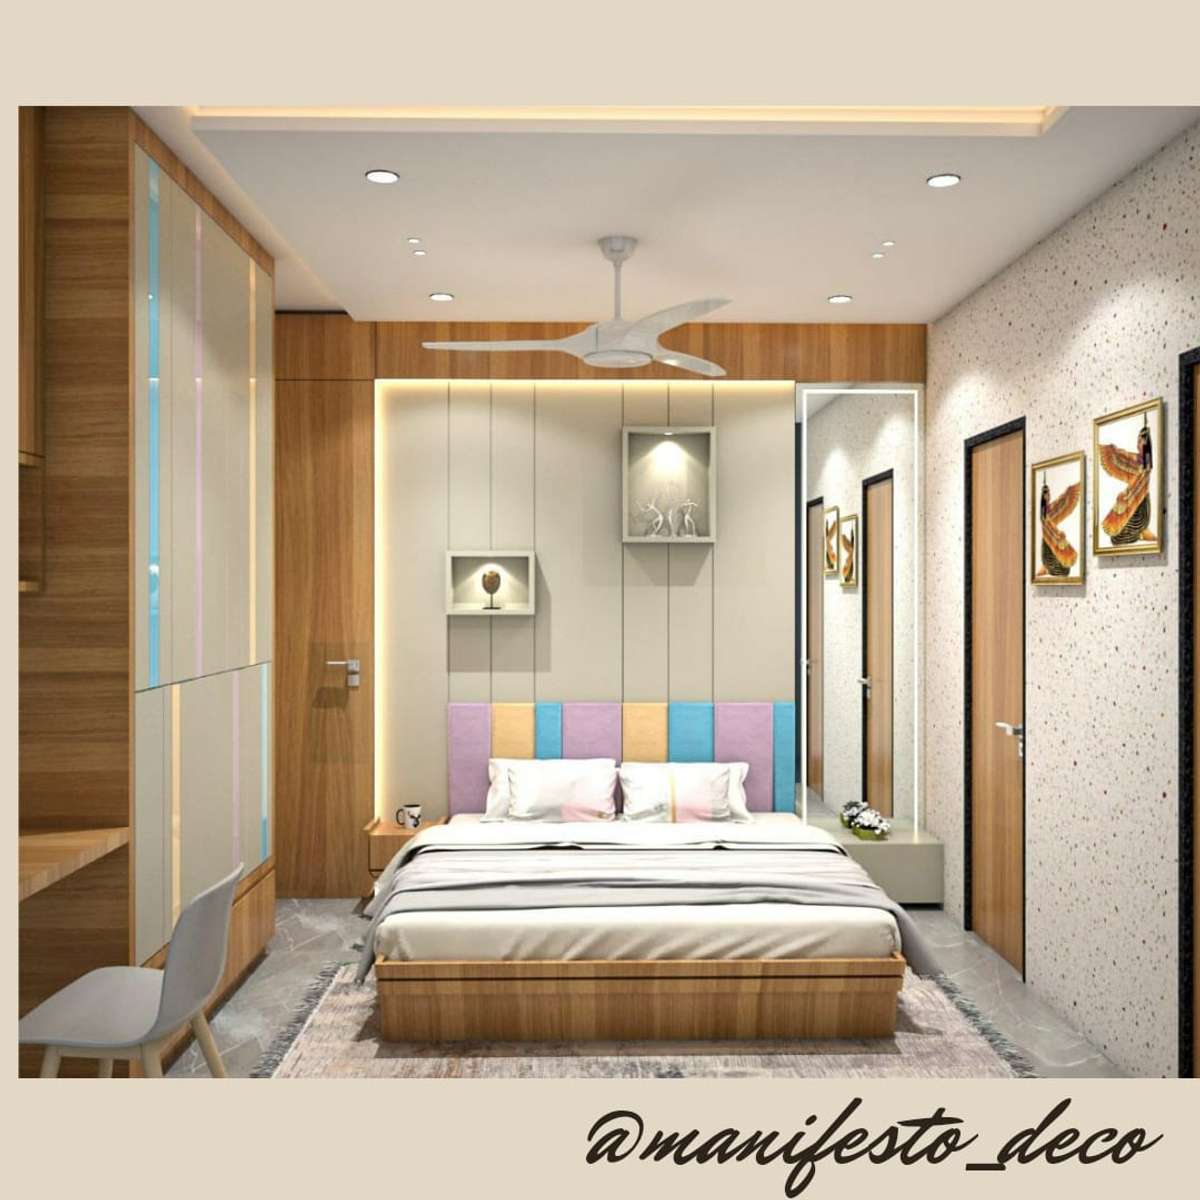 Furniture, Lighting, Storage, Wall, Bedroom Designs by Interior Designer Manifesto Interior Decor, Delhi | Kolo